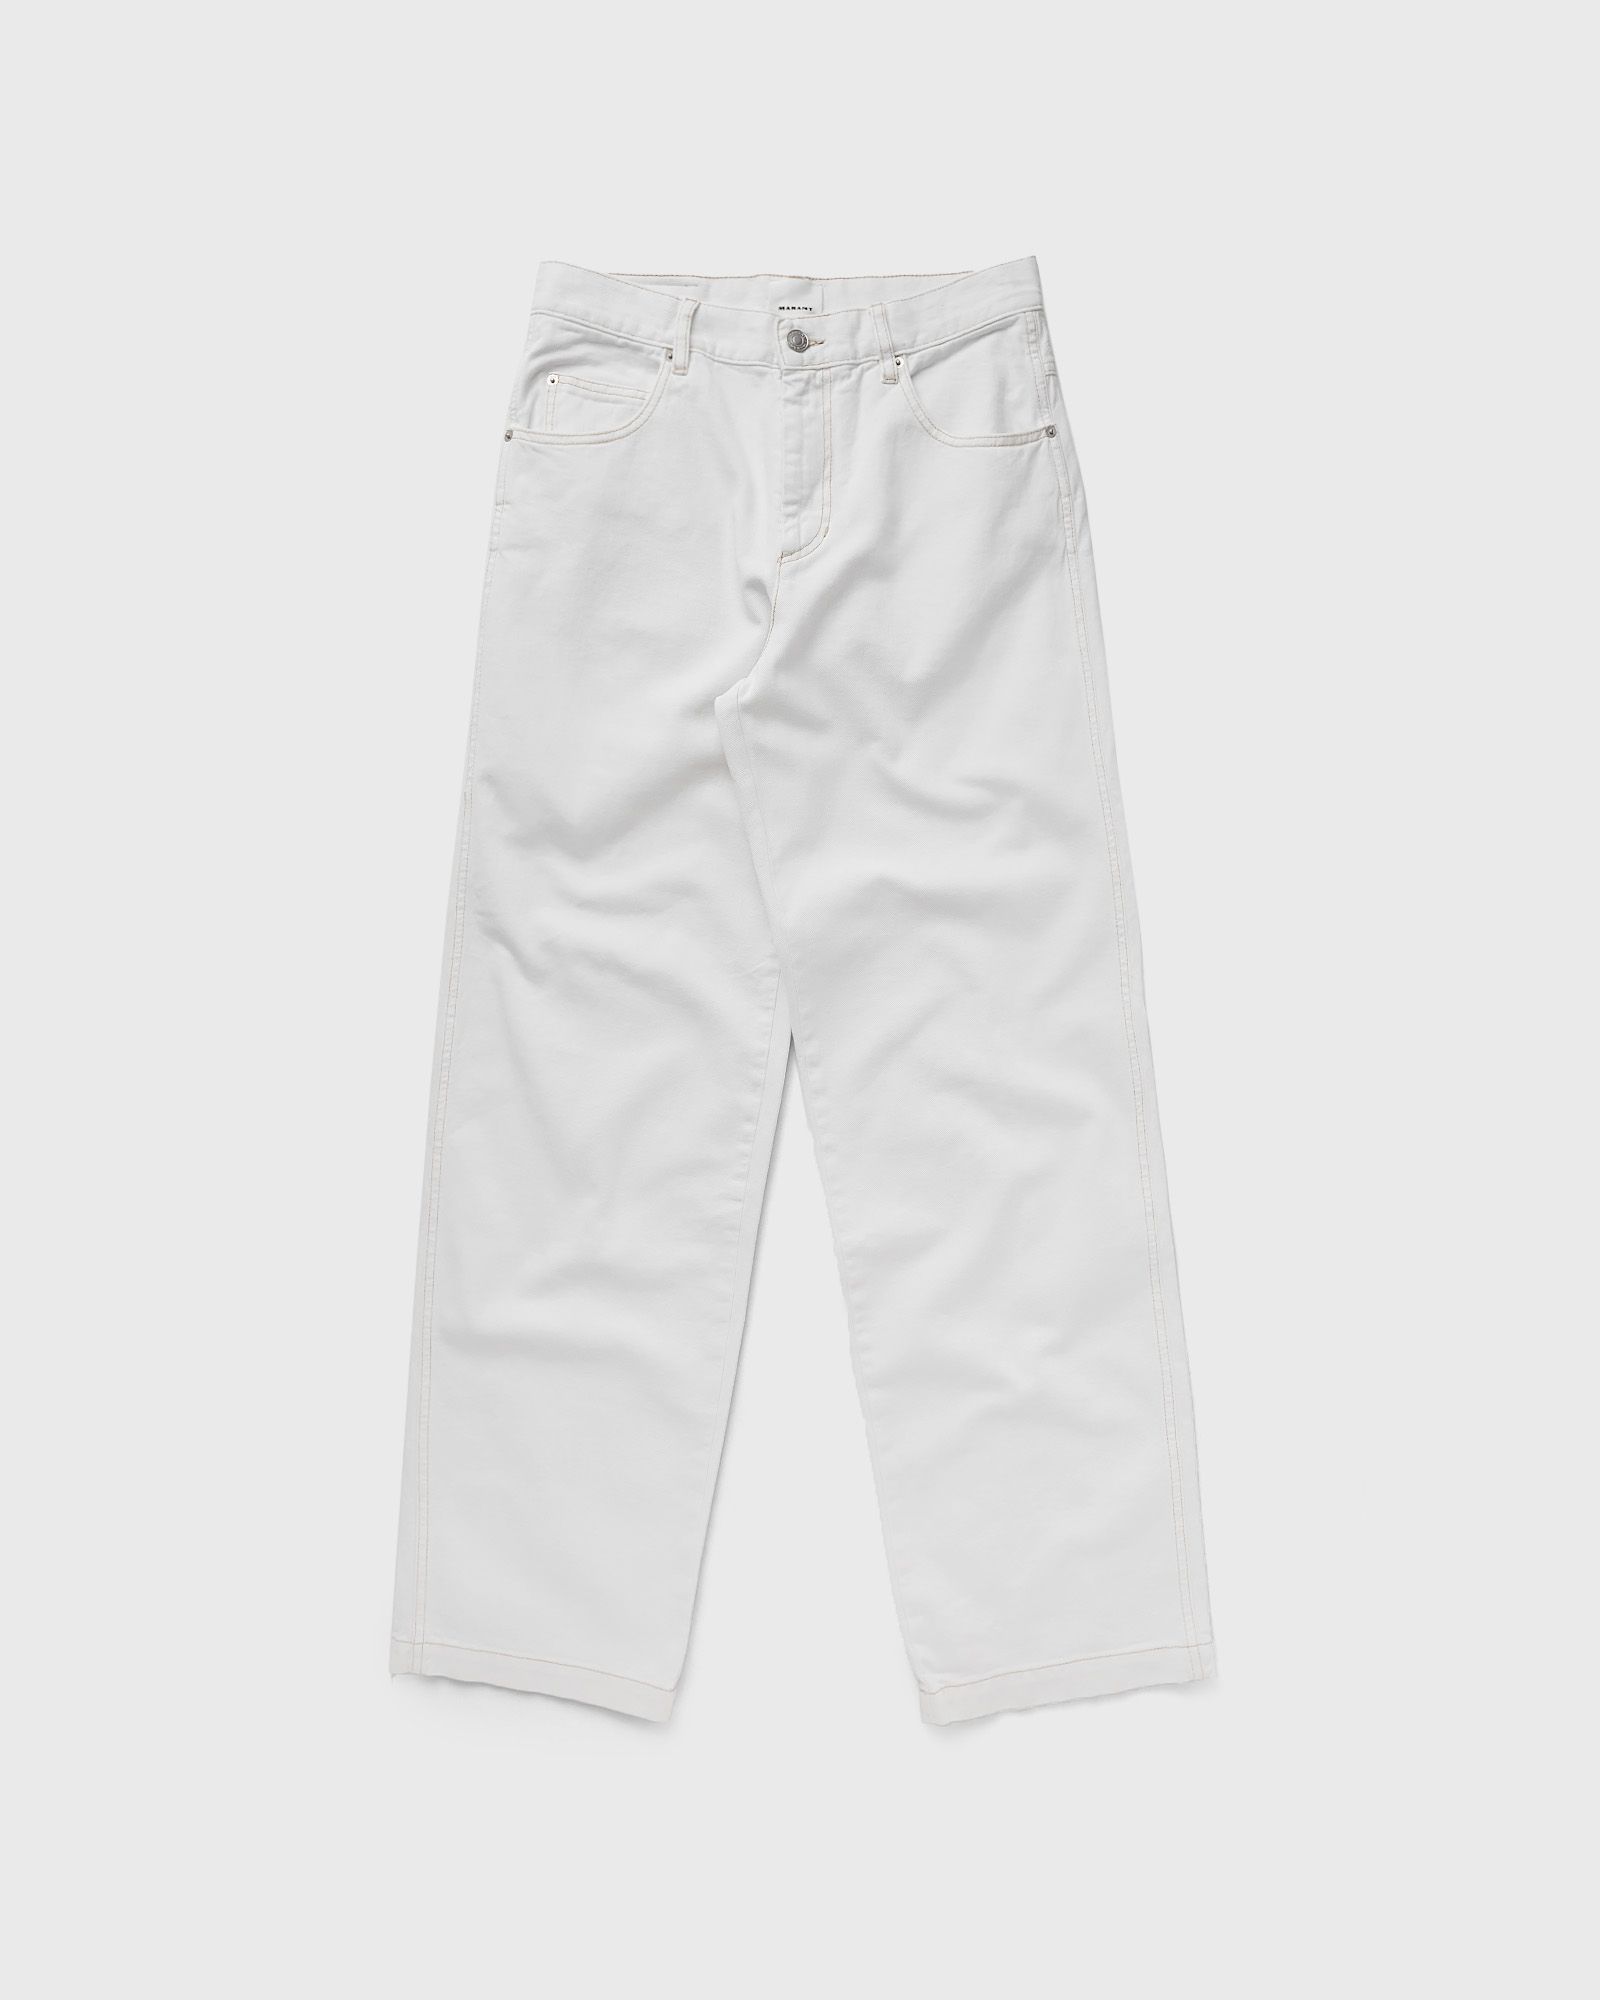 Marant JORJE PANTS men Jeans white in Größe:M von Marant